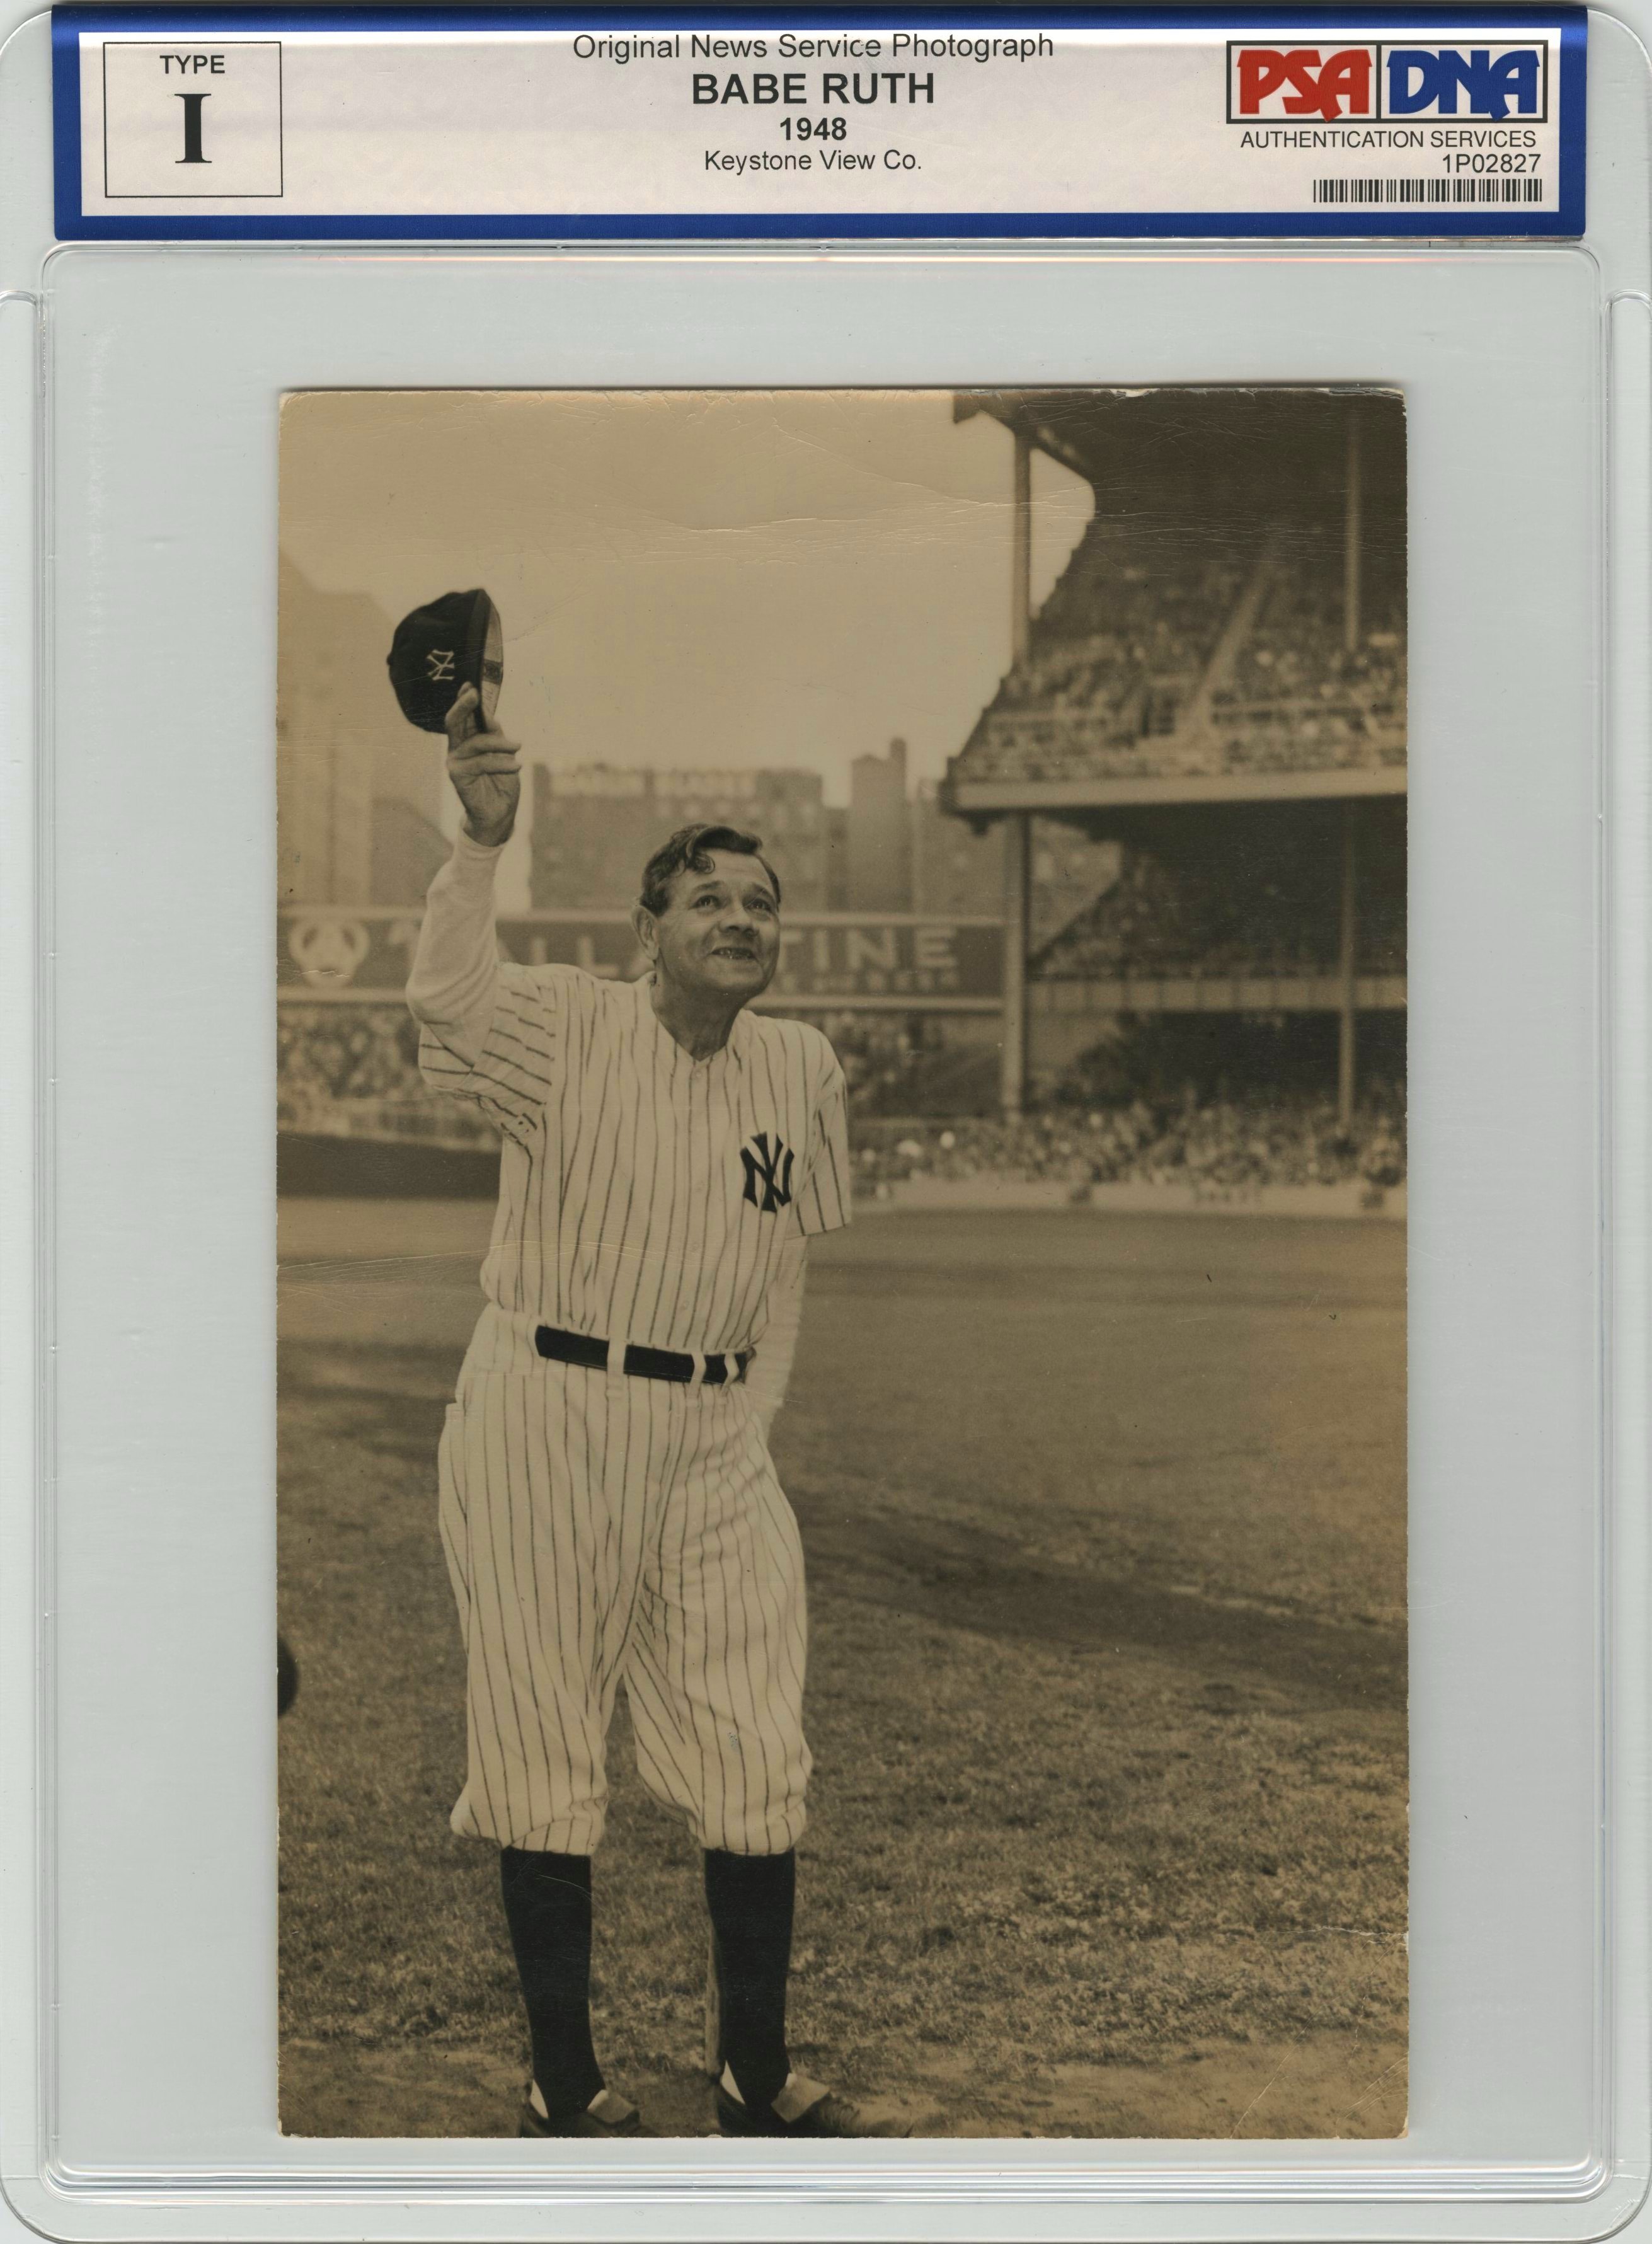 June 13, 1948: Babe Ruths farewell at Yankee Stadium 